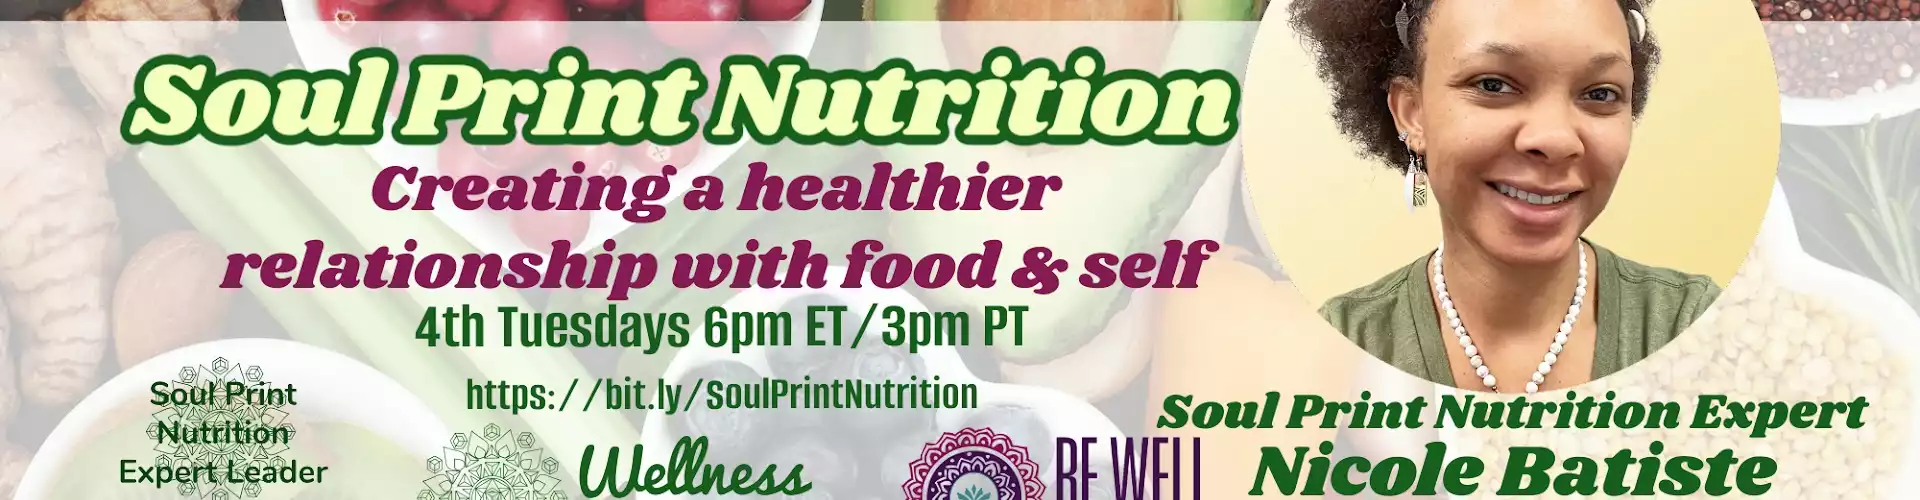 Soul Print Nutrition with WU Expert Leader Nicole Batiste